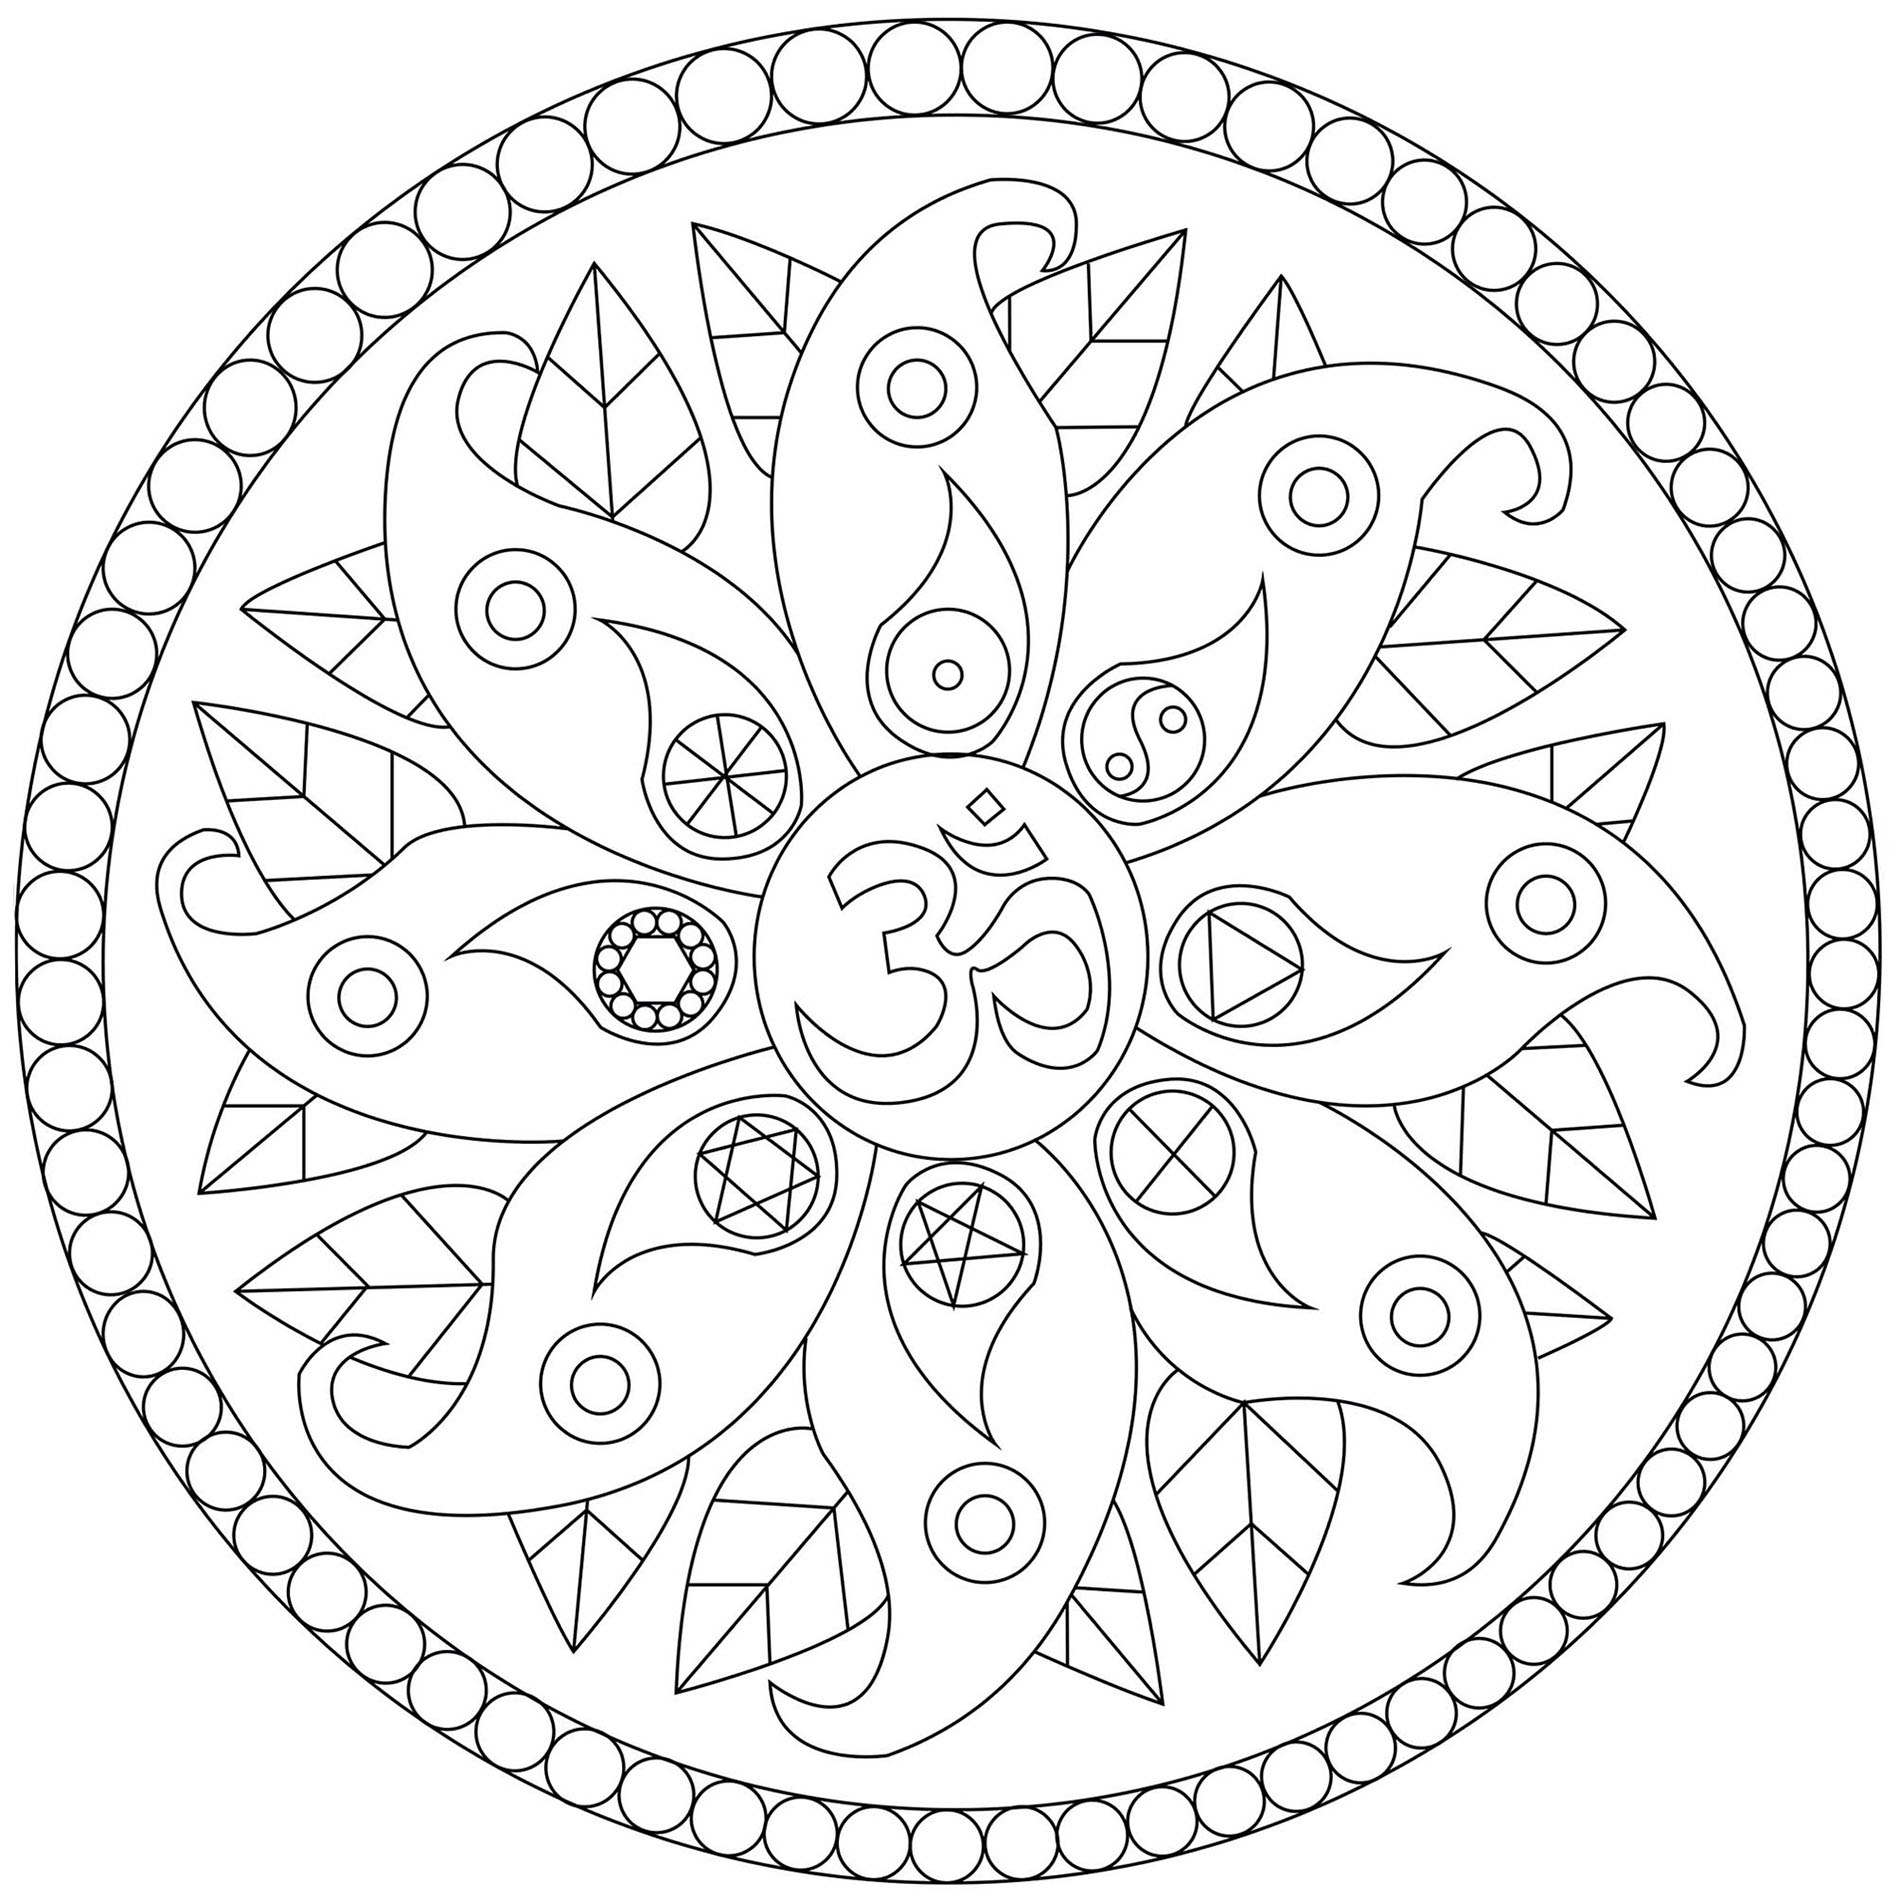 Motivos vegetais e símbolos diversos: Yin & Yang, Om .., Artista : Caillou